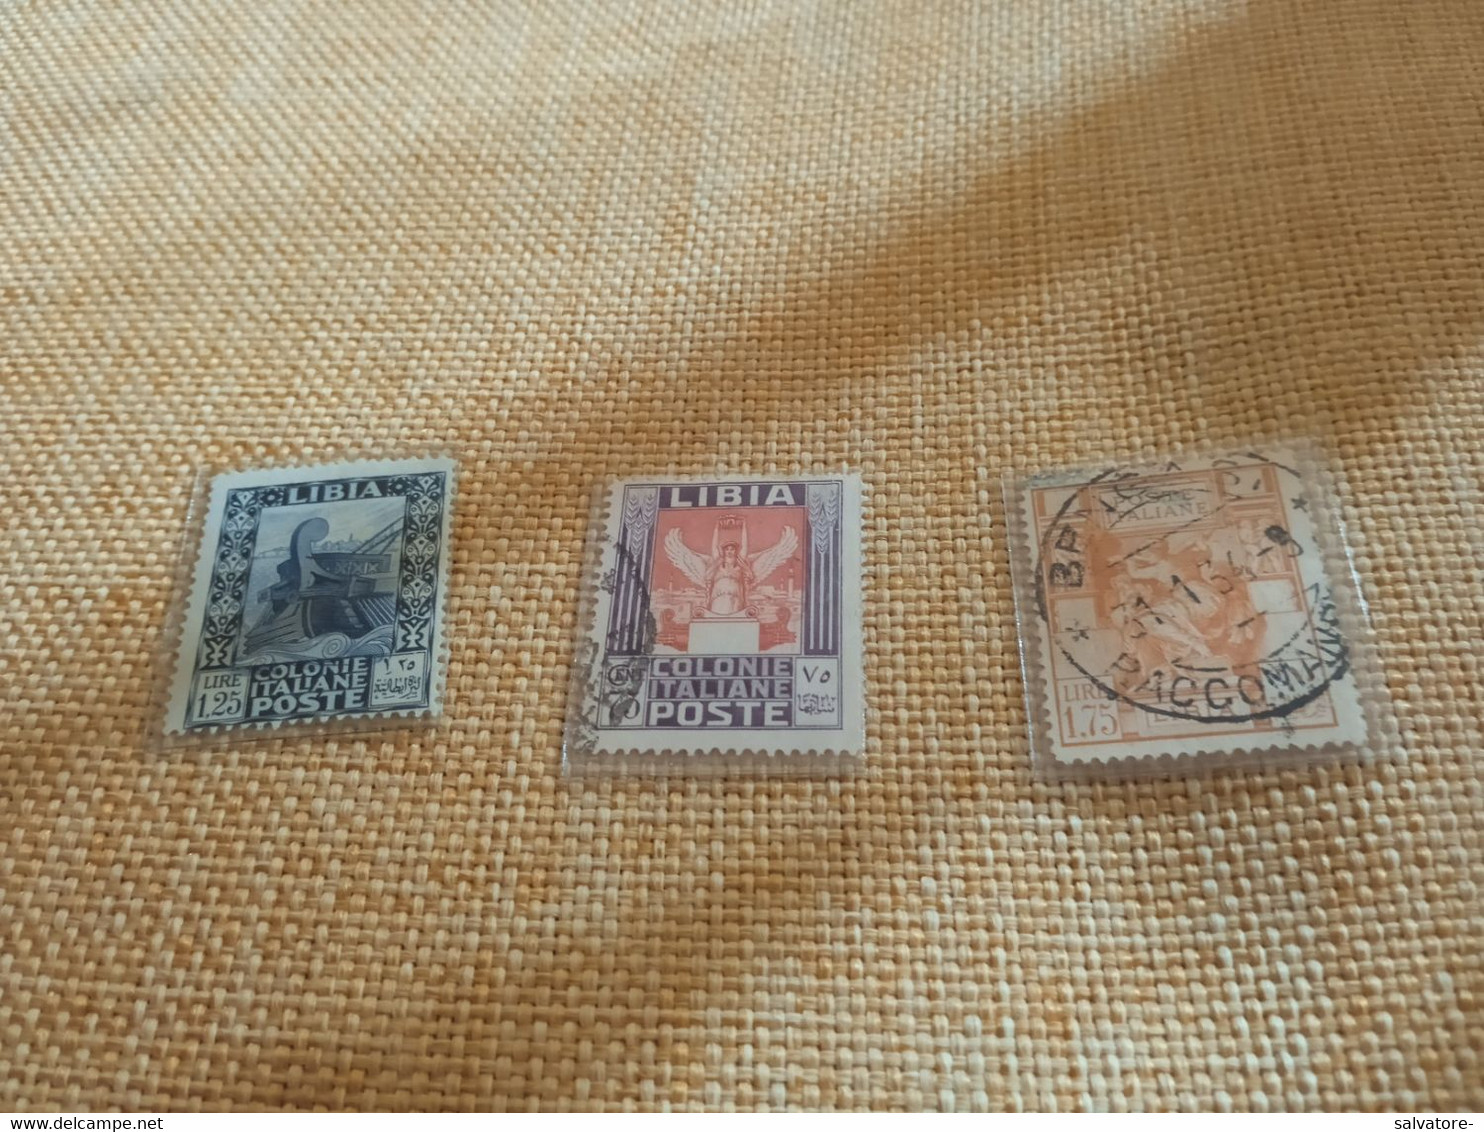 Francobolli LIBIA VALORI LIRE 1,75,1,25,75 CENTESIMI- ANNULLATI - Libia